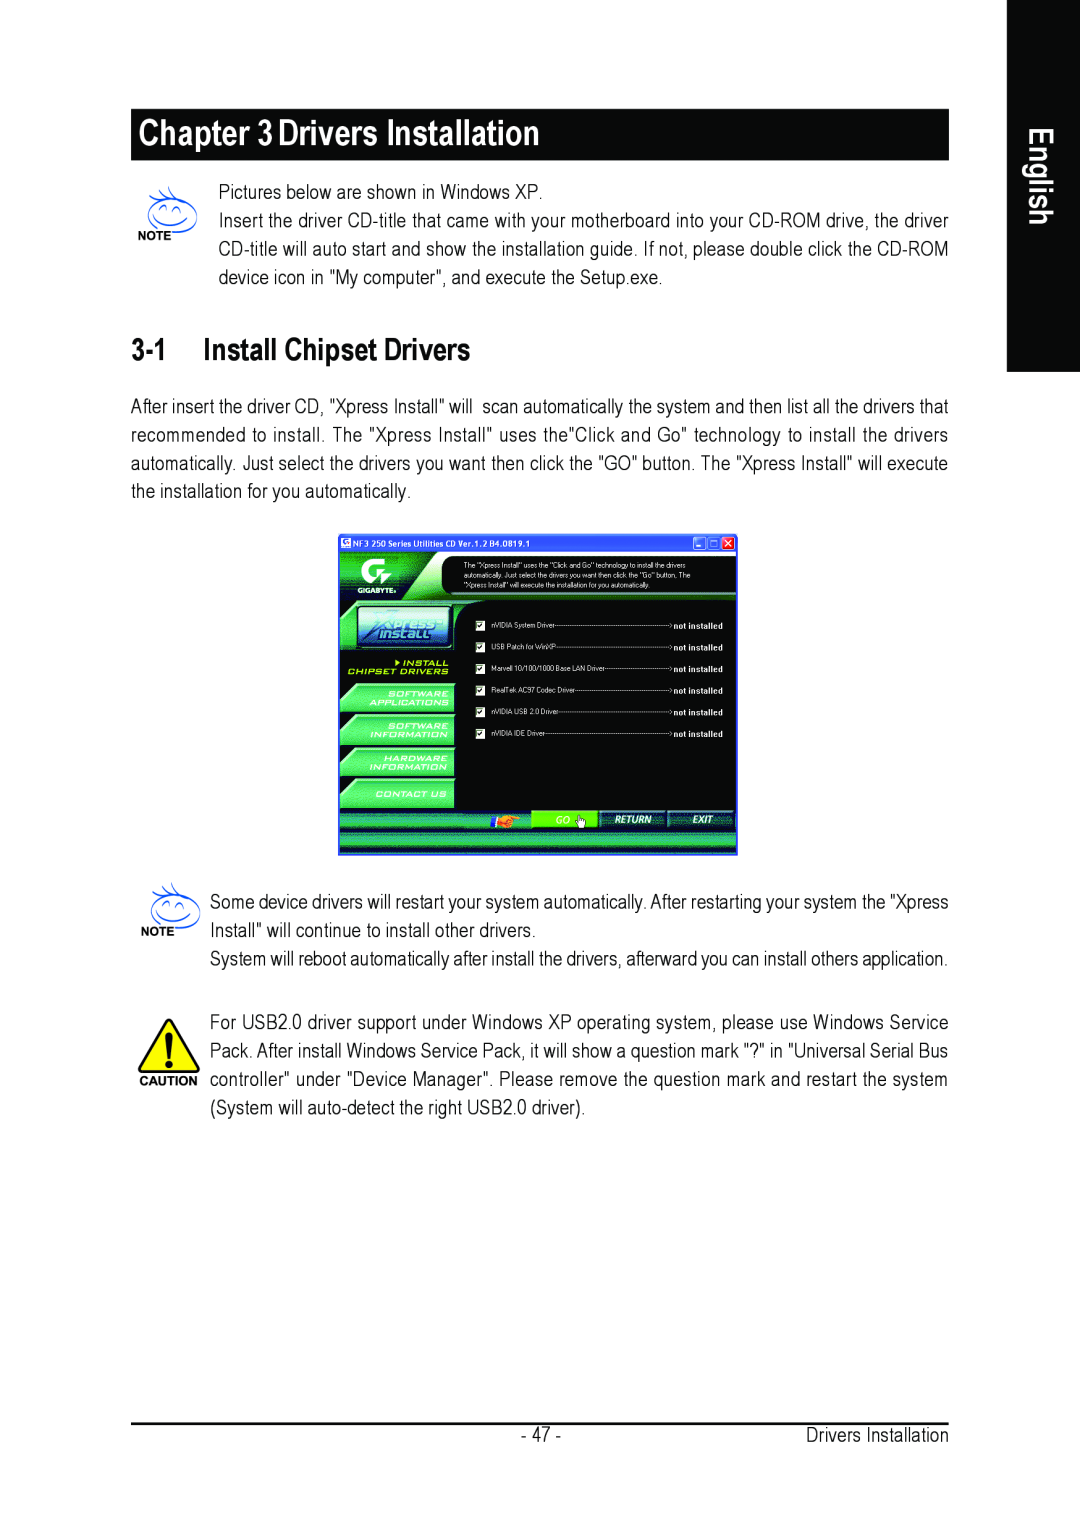 AMD GA-K8NSC-939 user manual Drivers Installation, Install Chipset Drivers, English 